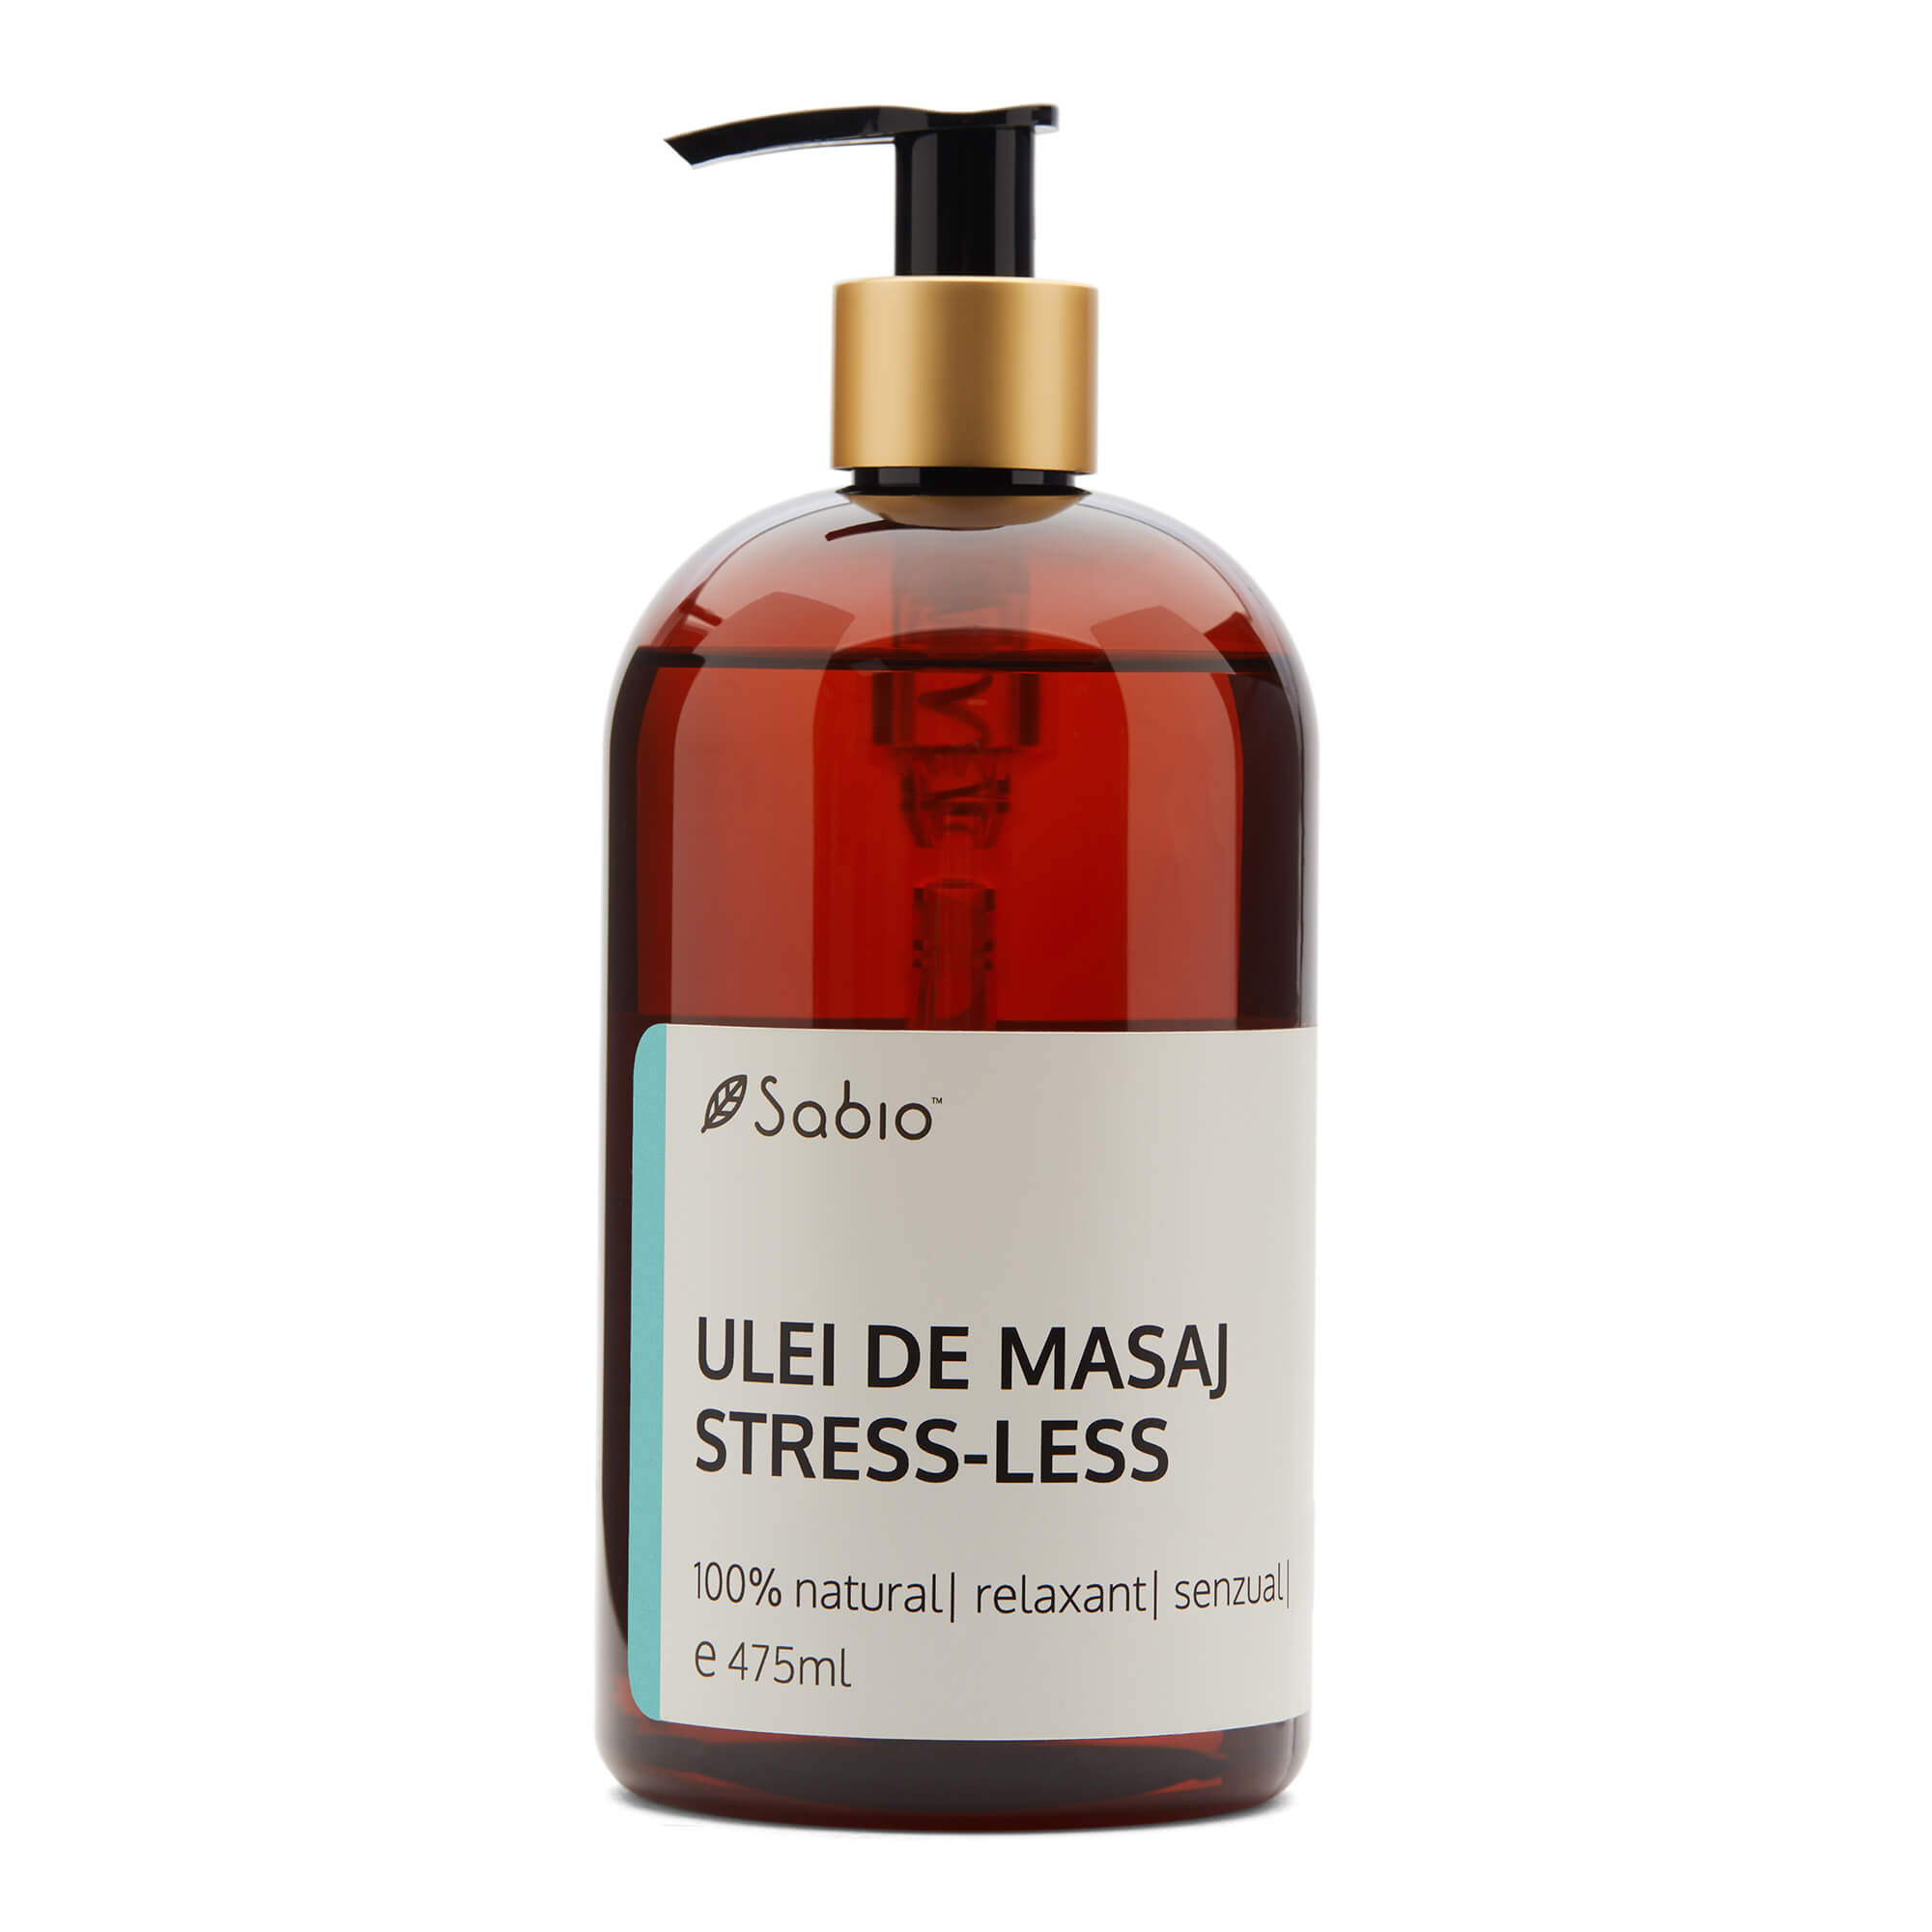 Stress-Less massage oil